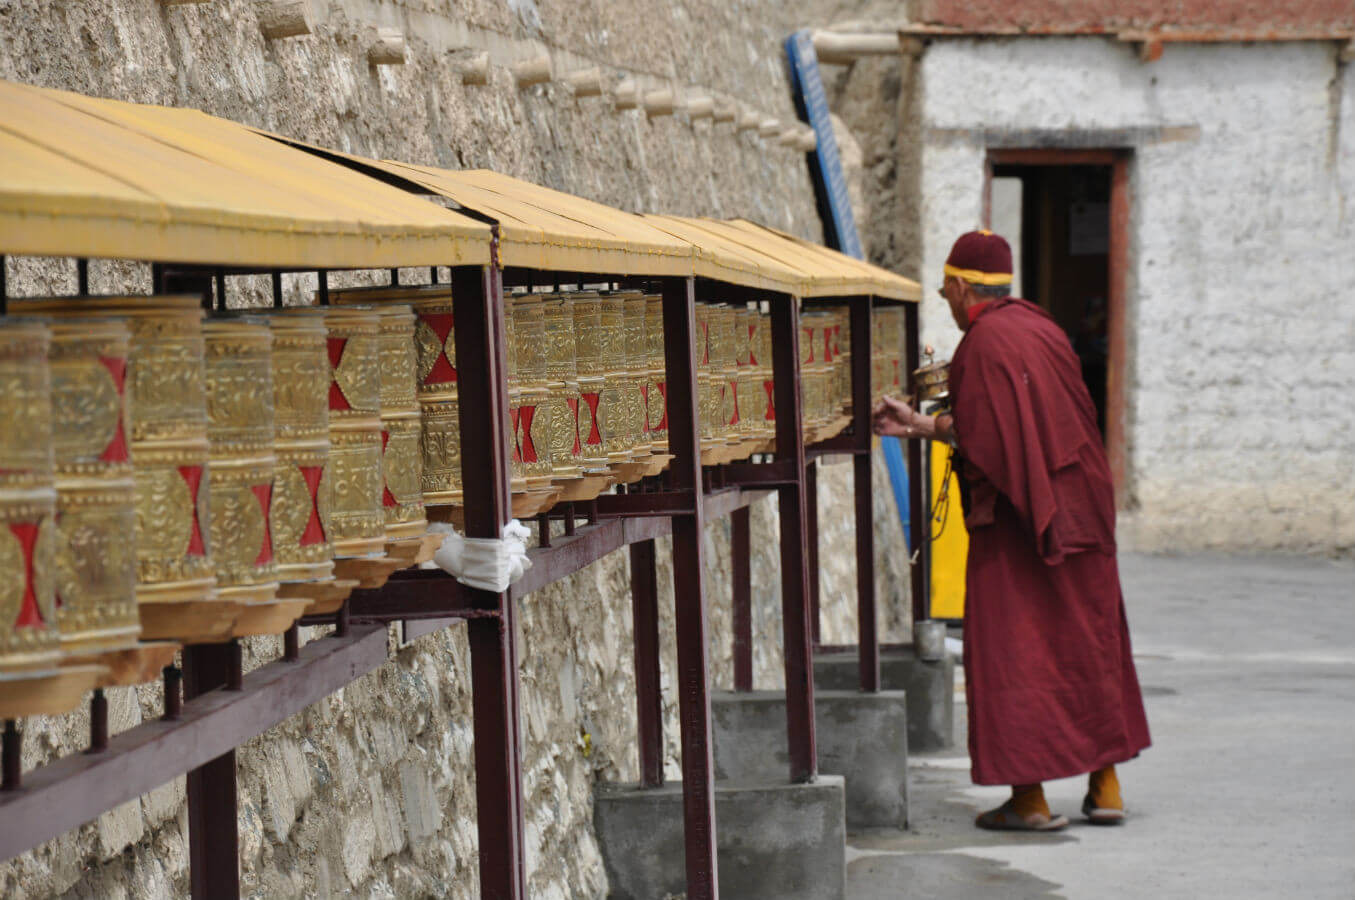 kloster lamayuru tibet indien